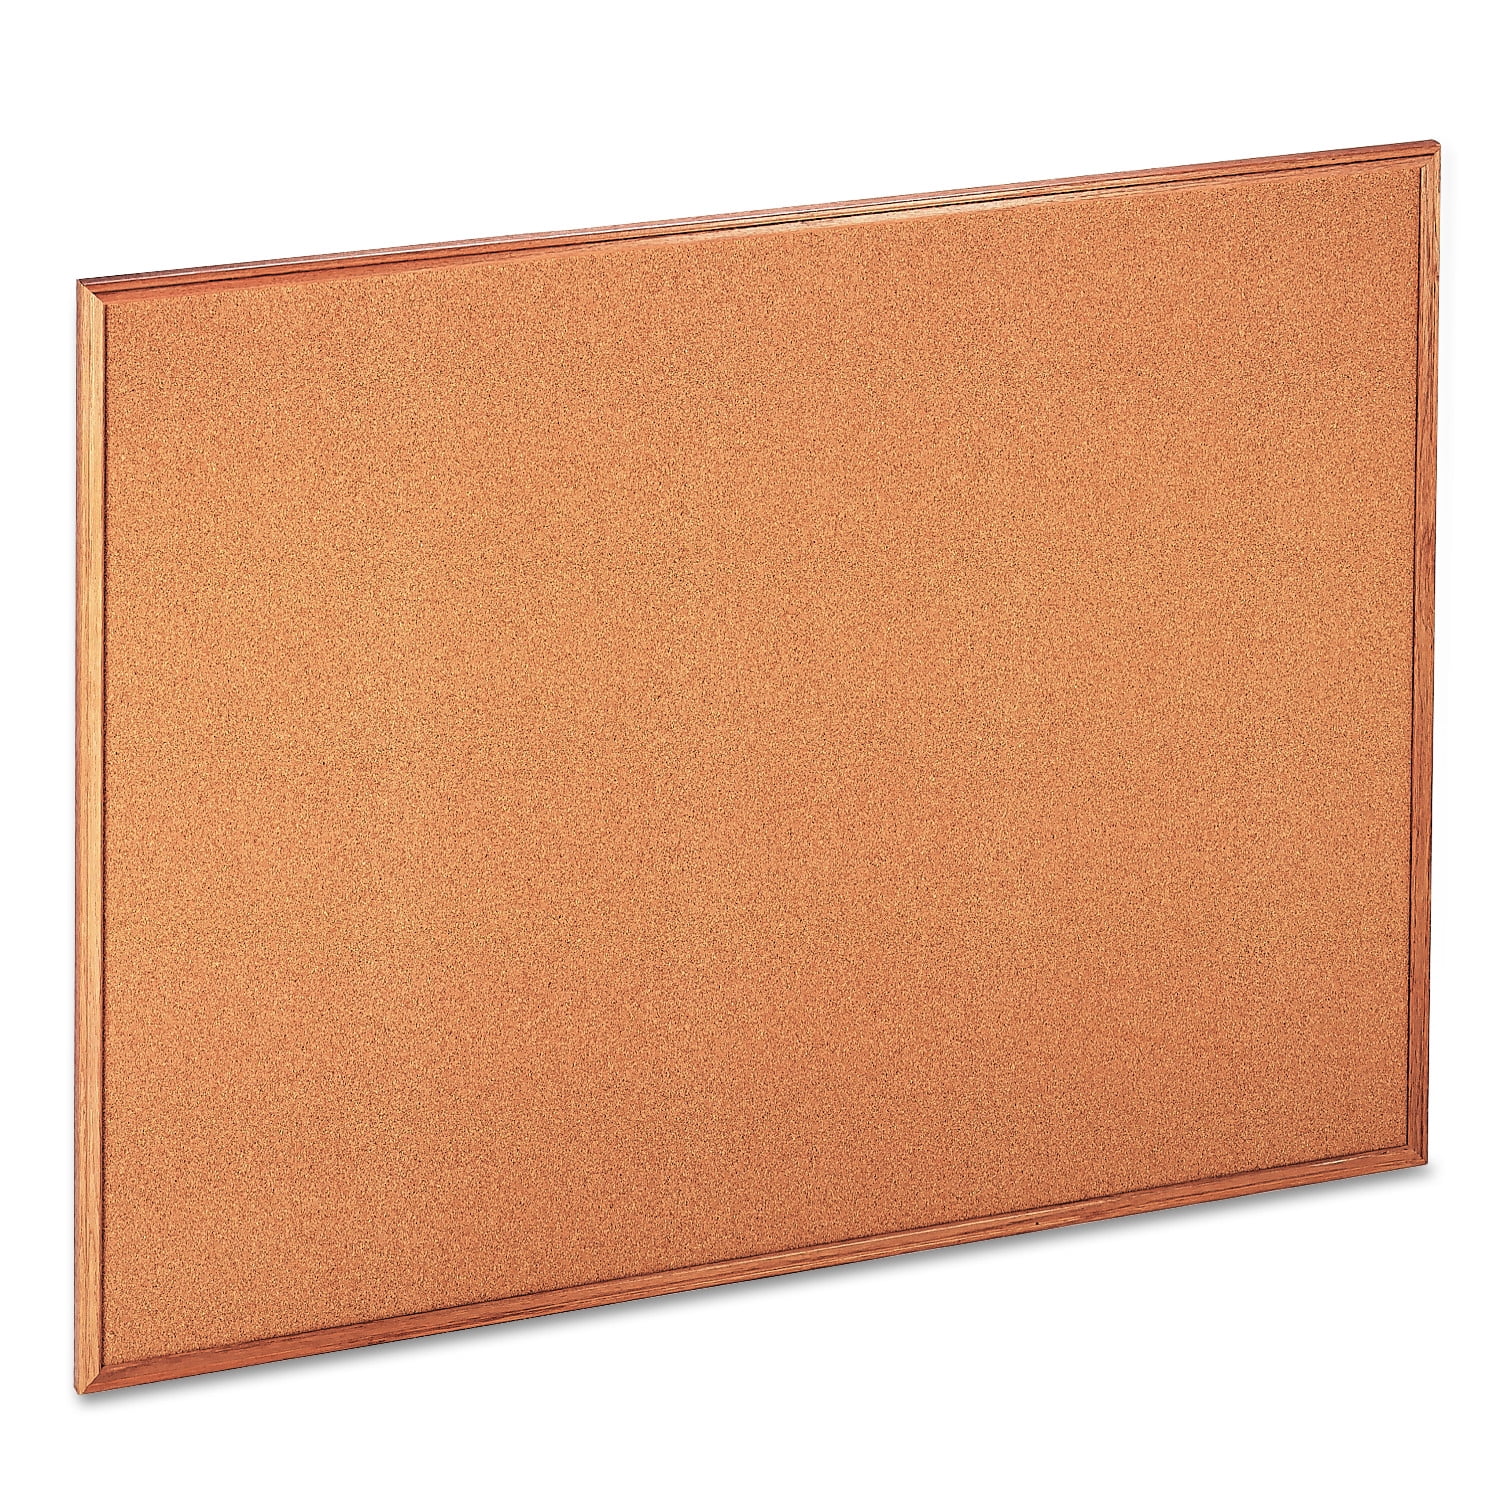 Rustic Cedar Frame Cork Board 12x 24 Outer Dimensions, 9 X 20 3/4